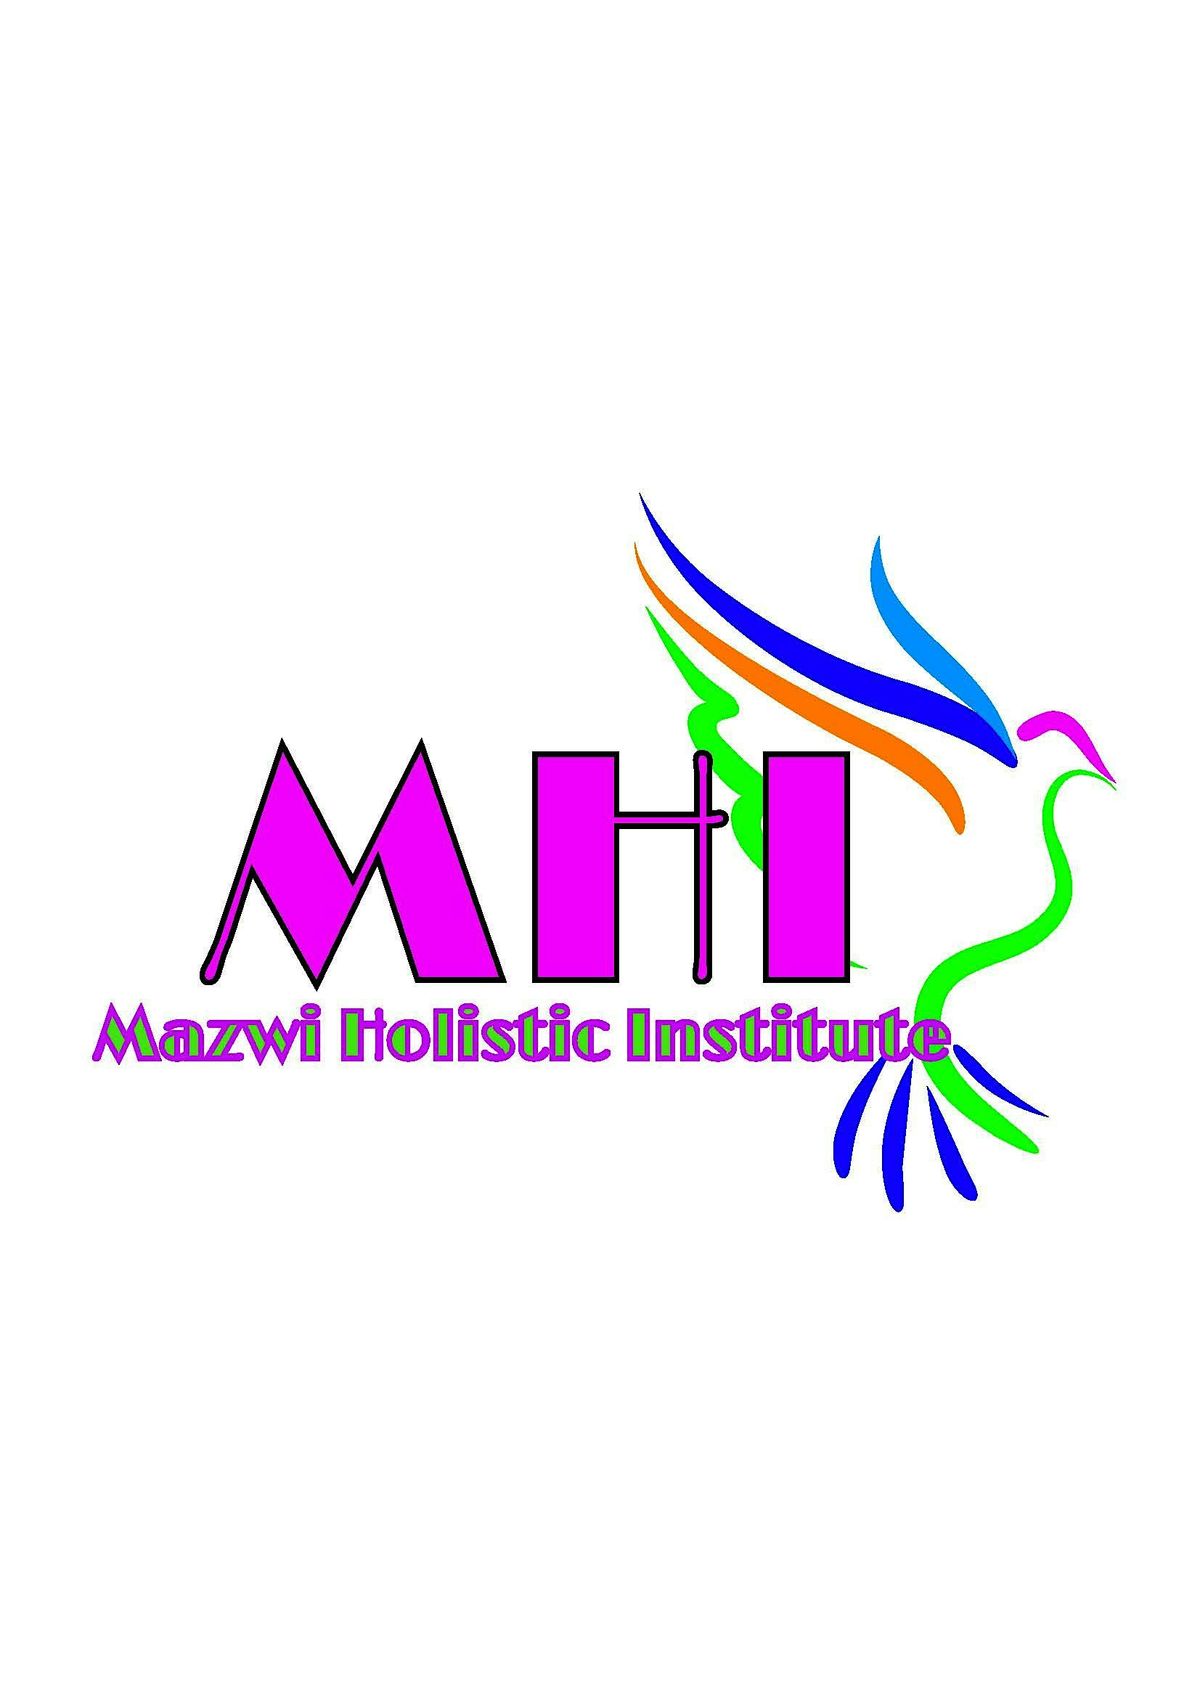 Mazwi Holistic Institute's Community Health and Wellness Day